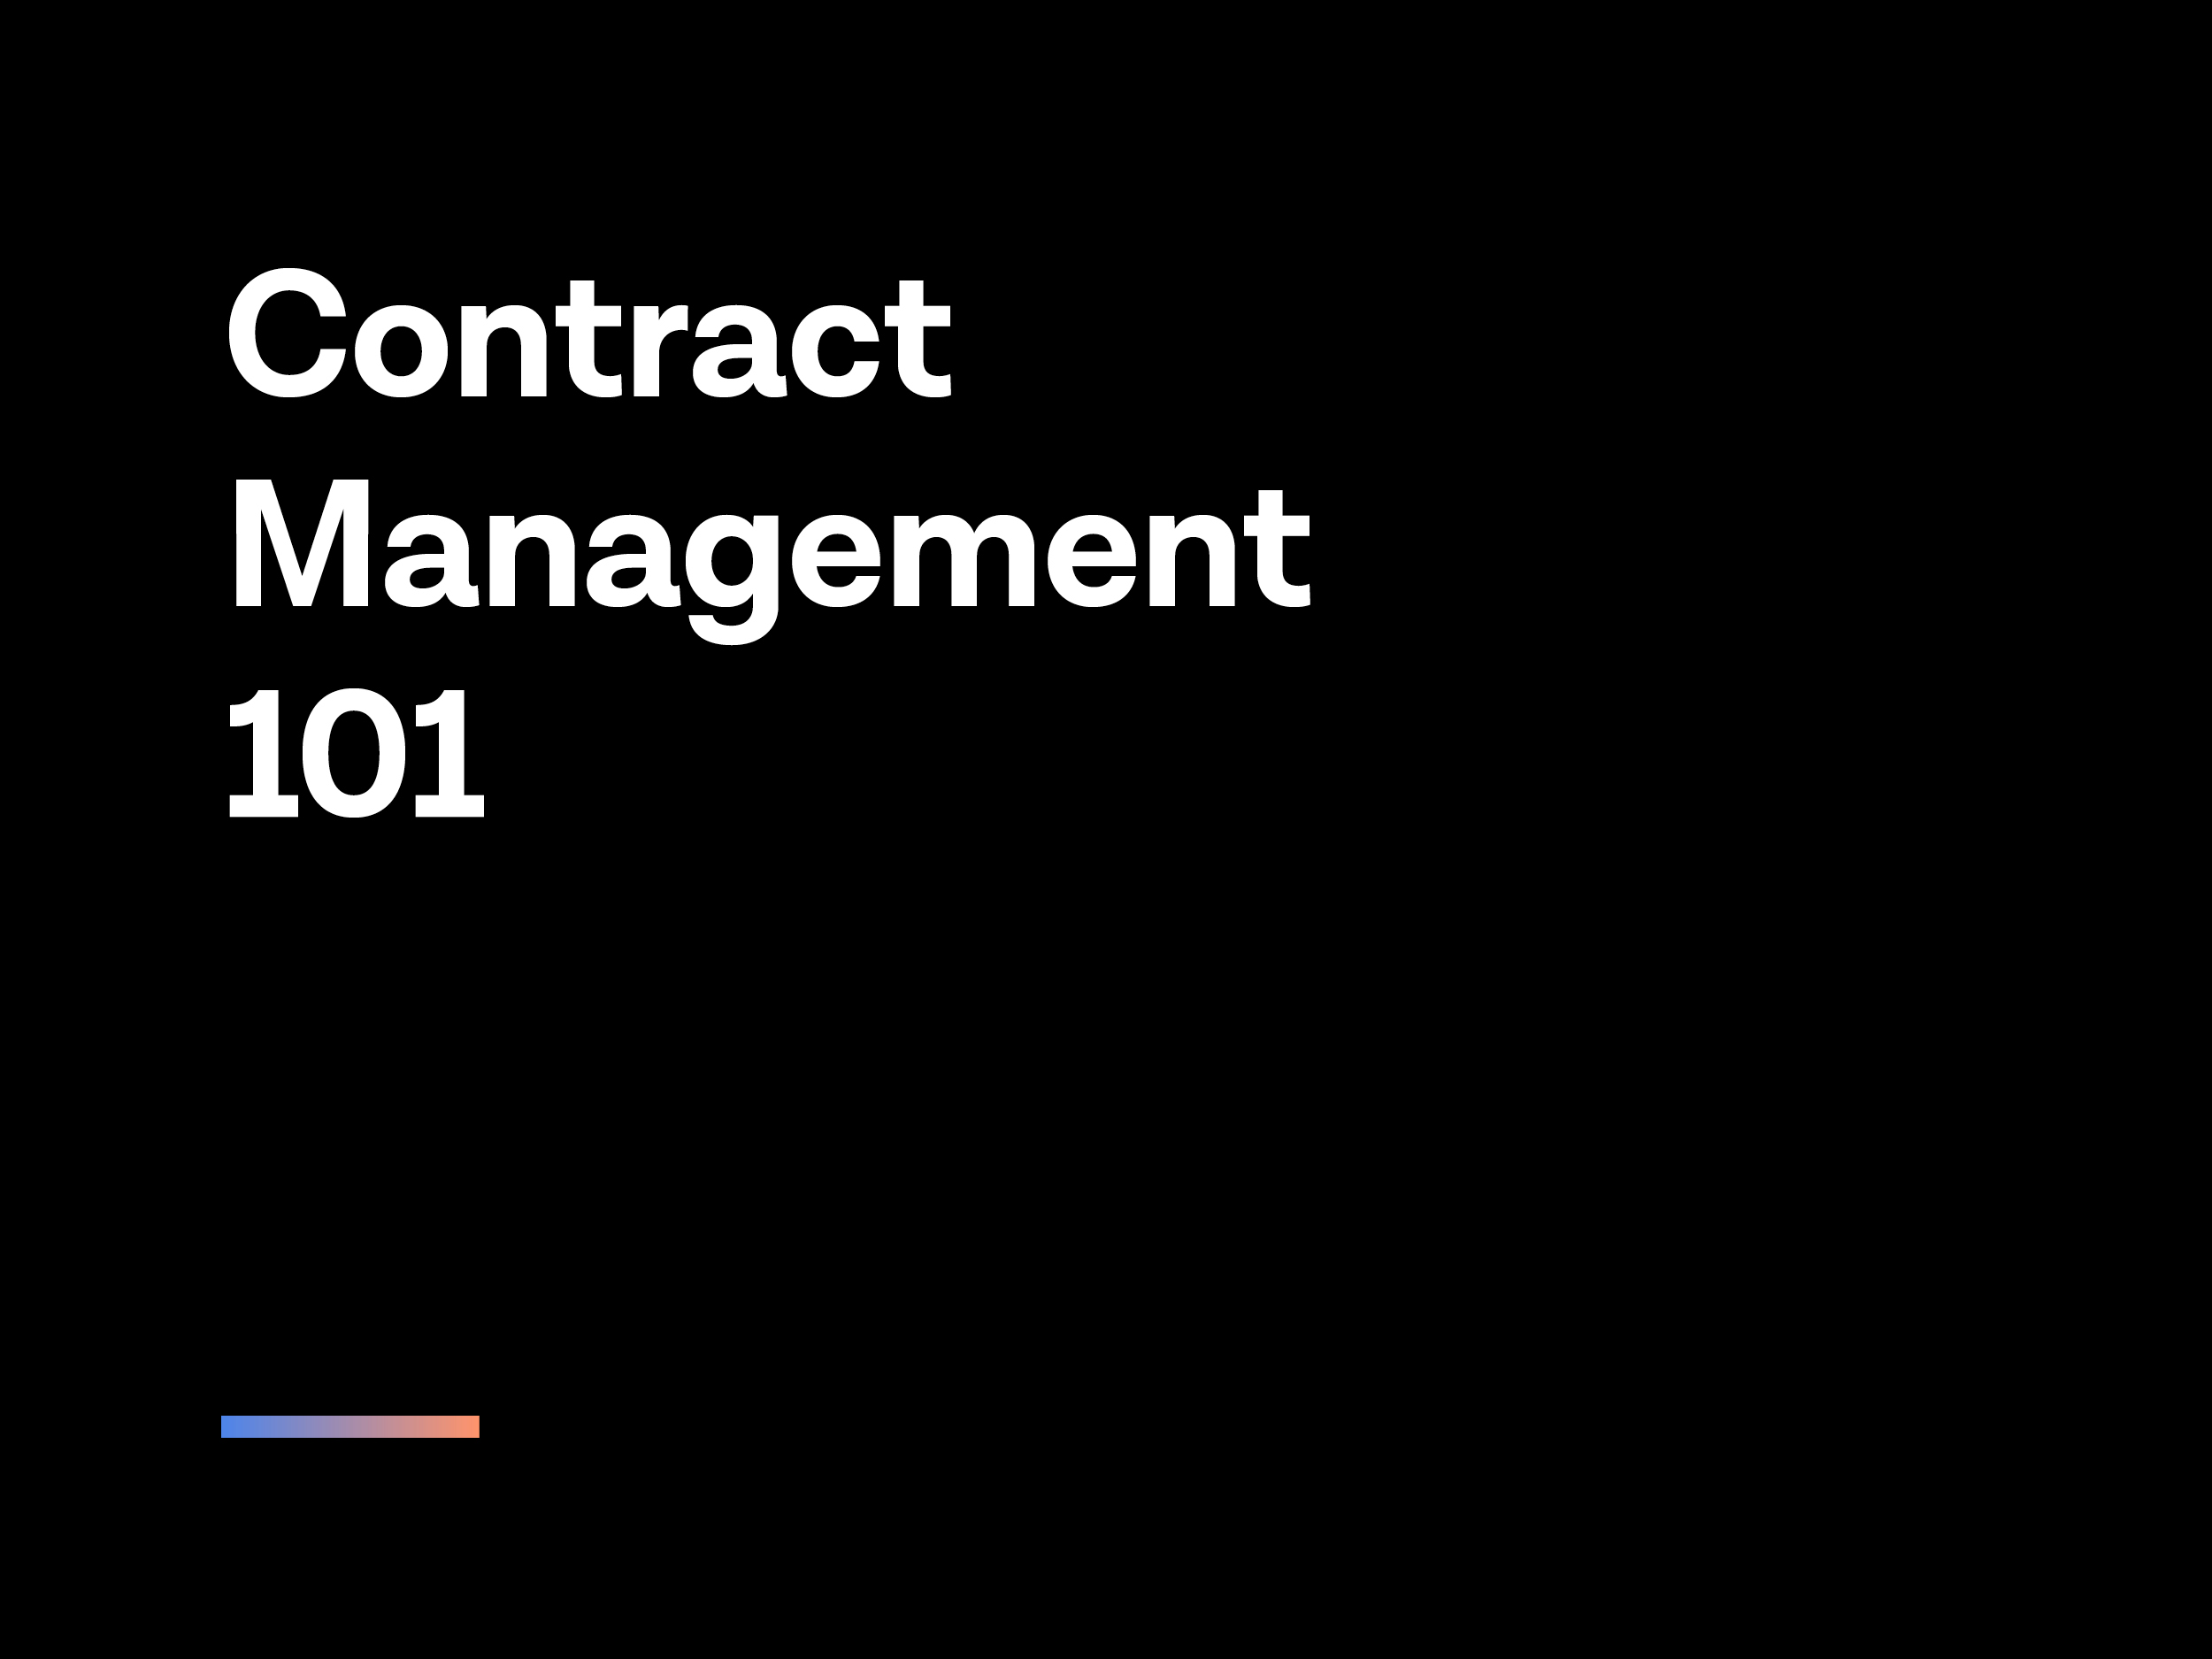 C365-ebook-contract-management-101